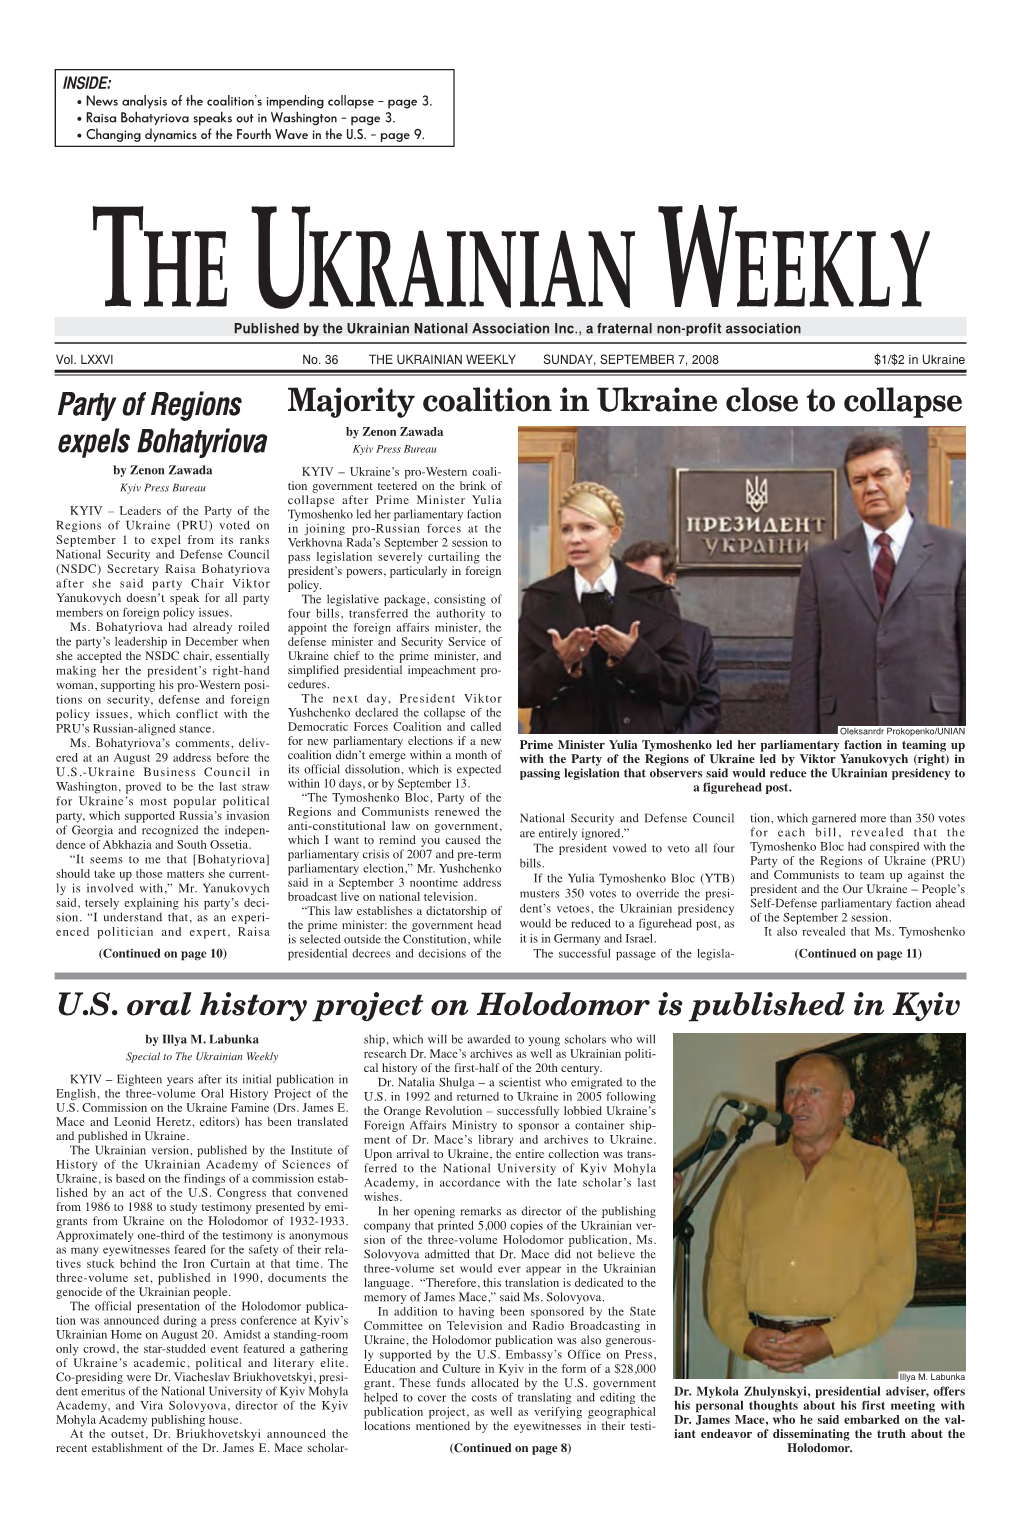 The Ukrainian Weekly 2008, No.36